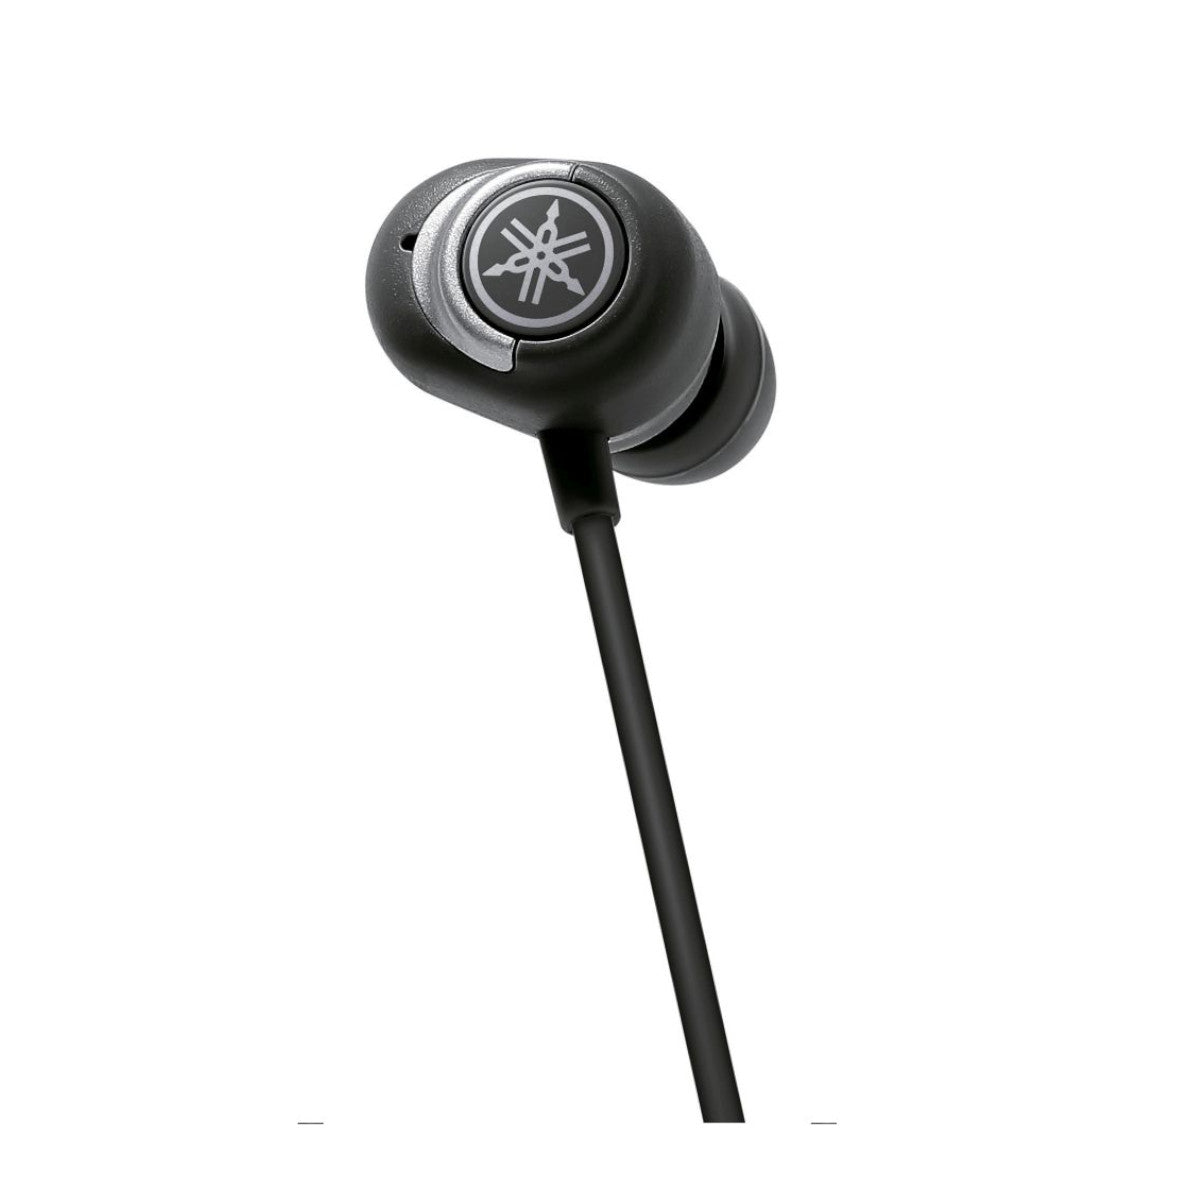 Yamaha EP-E50ABL Bluetooth Wireless Noise-Cancelling Neckband Earphones (Black) - Ooberpad India